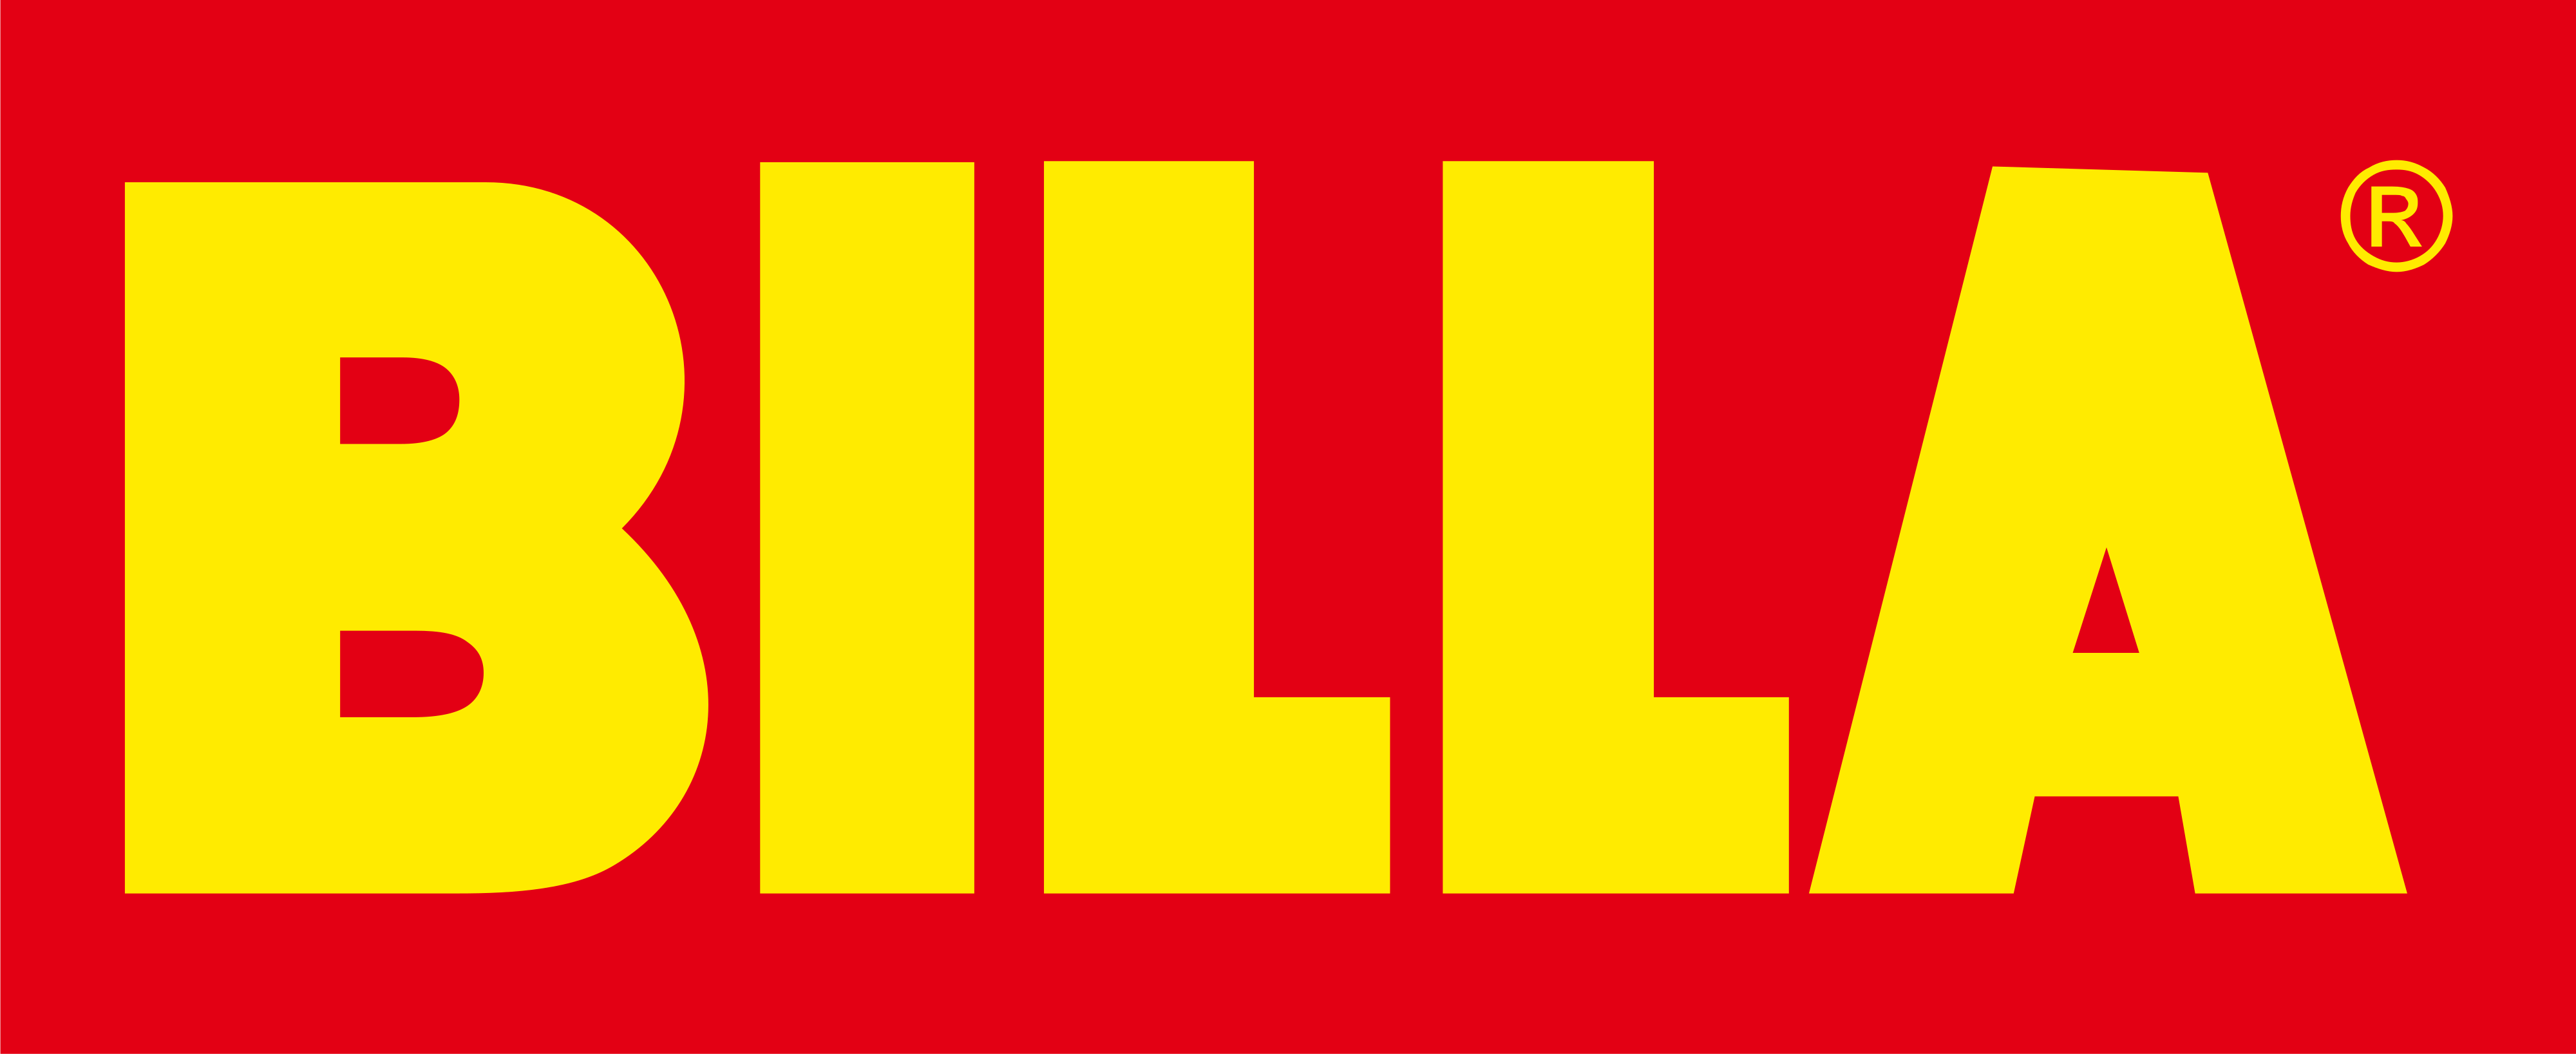 Billa logo - download.